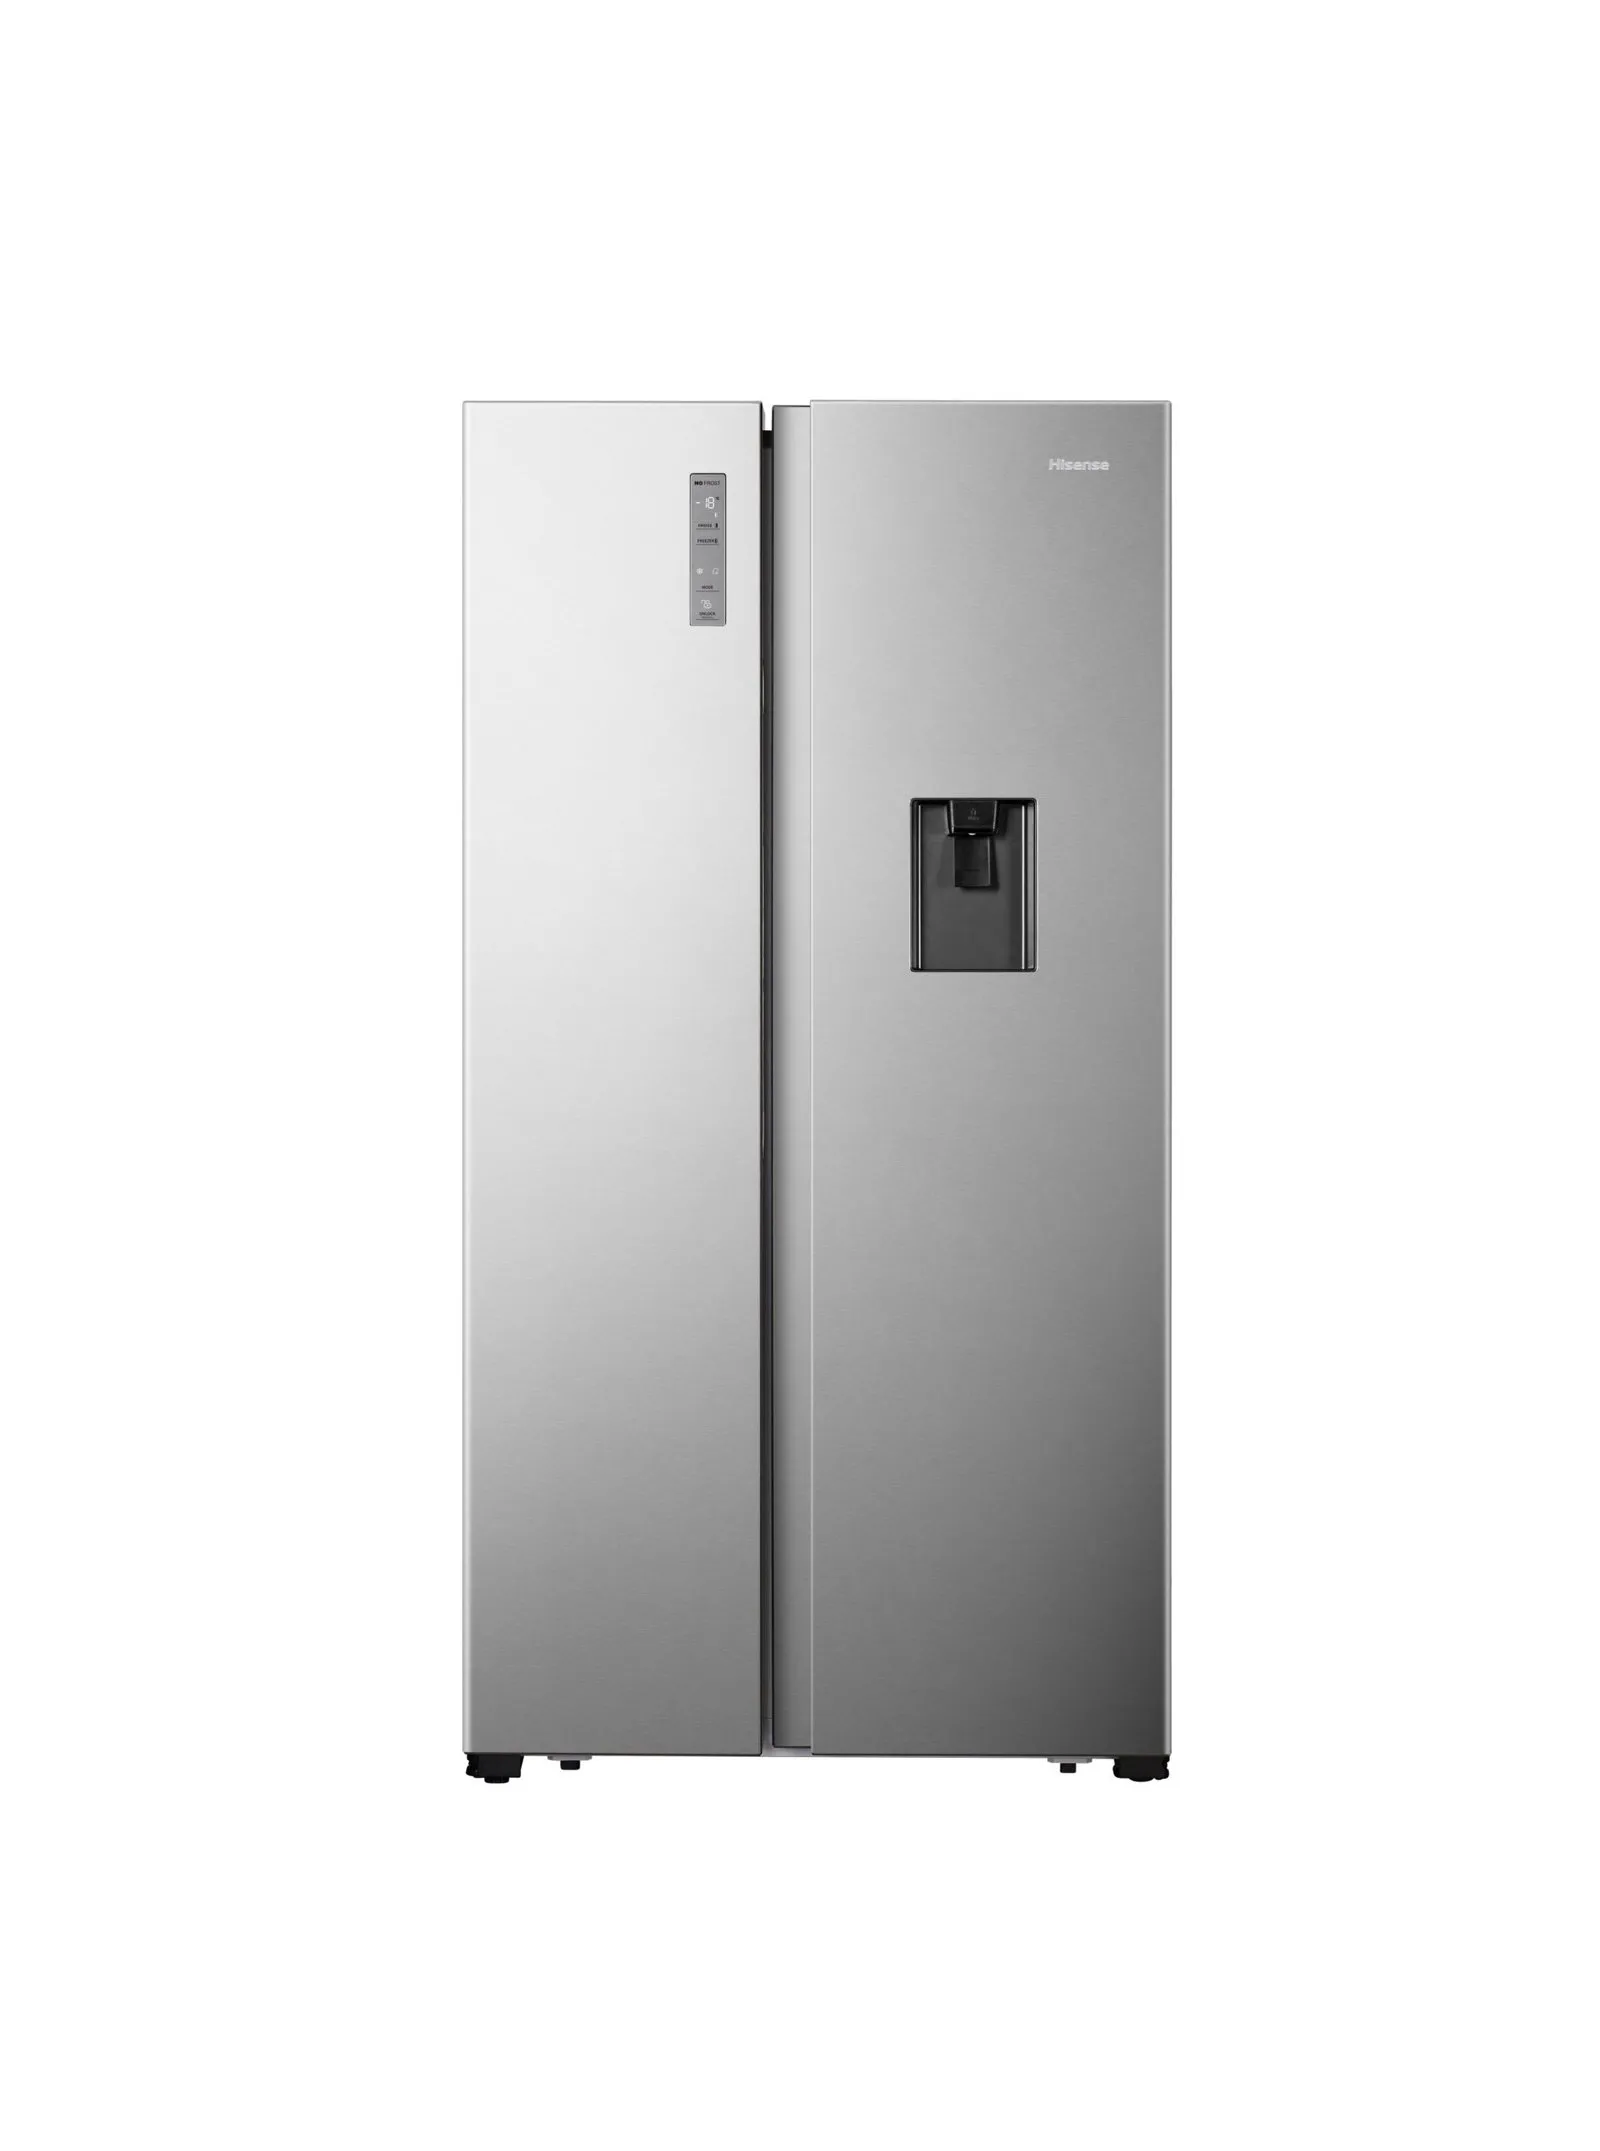 Hisense 670 Liter Side By Side Refrigerator With Water Dispenser Silver Model RS670N4WSU1 | 1 Year Full 5 Years Compressor Warranty